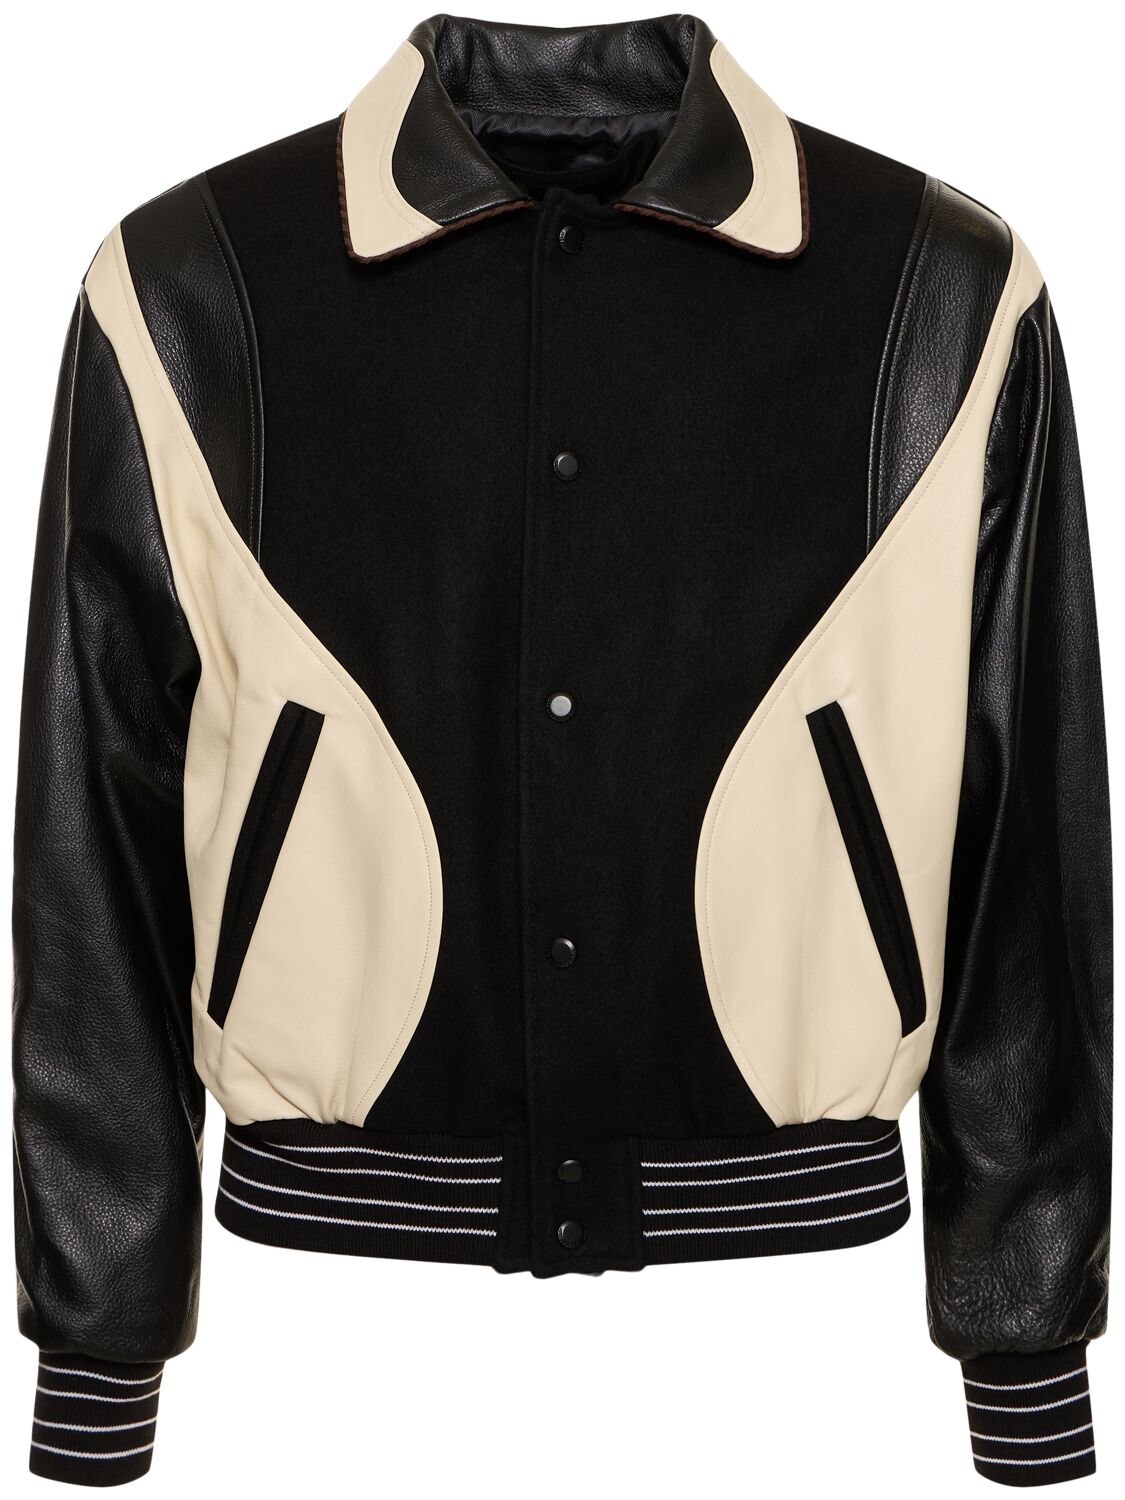 Robyn Wool & Leather Varsity Jacket